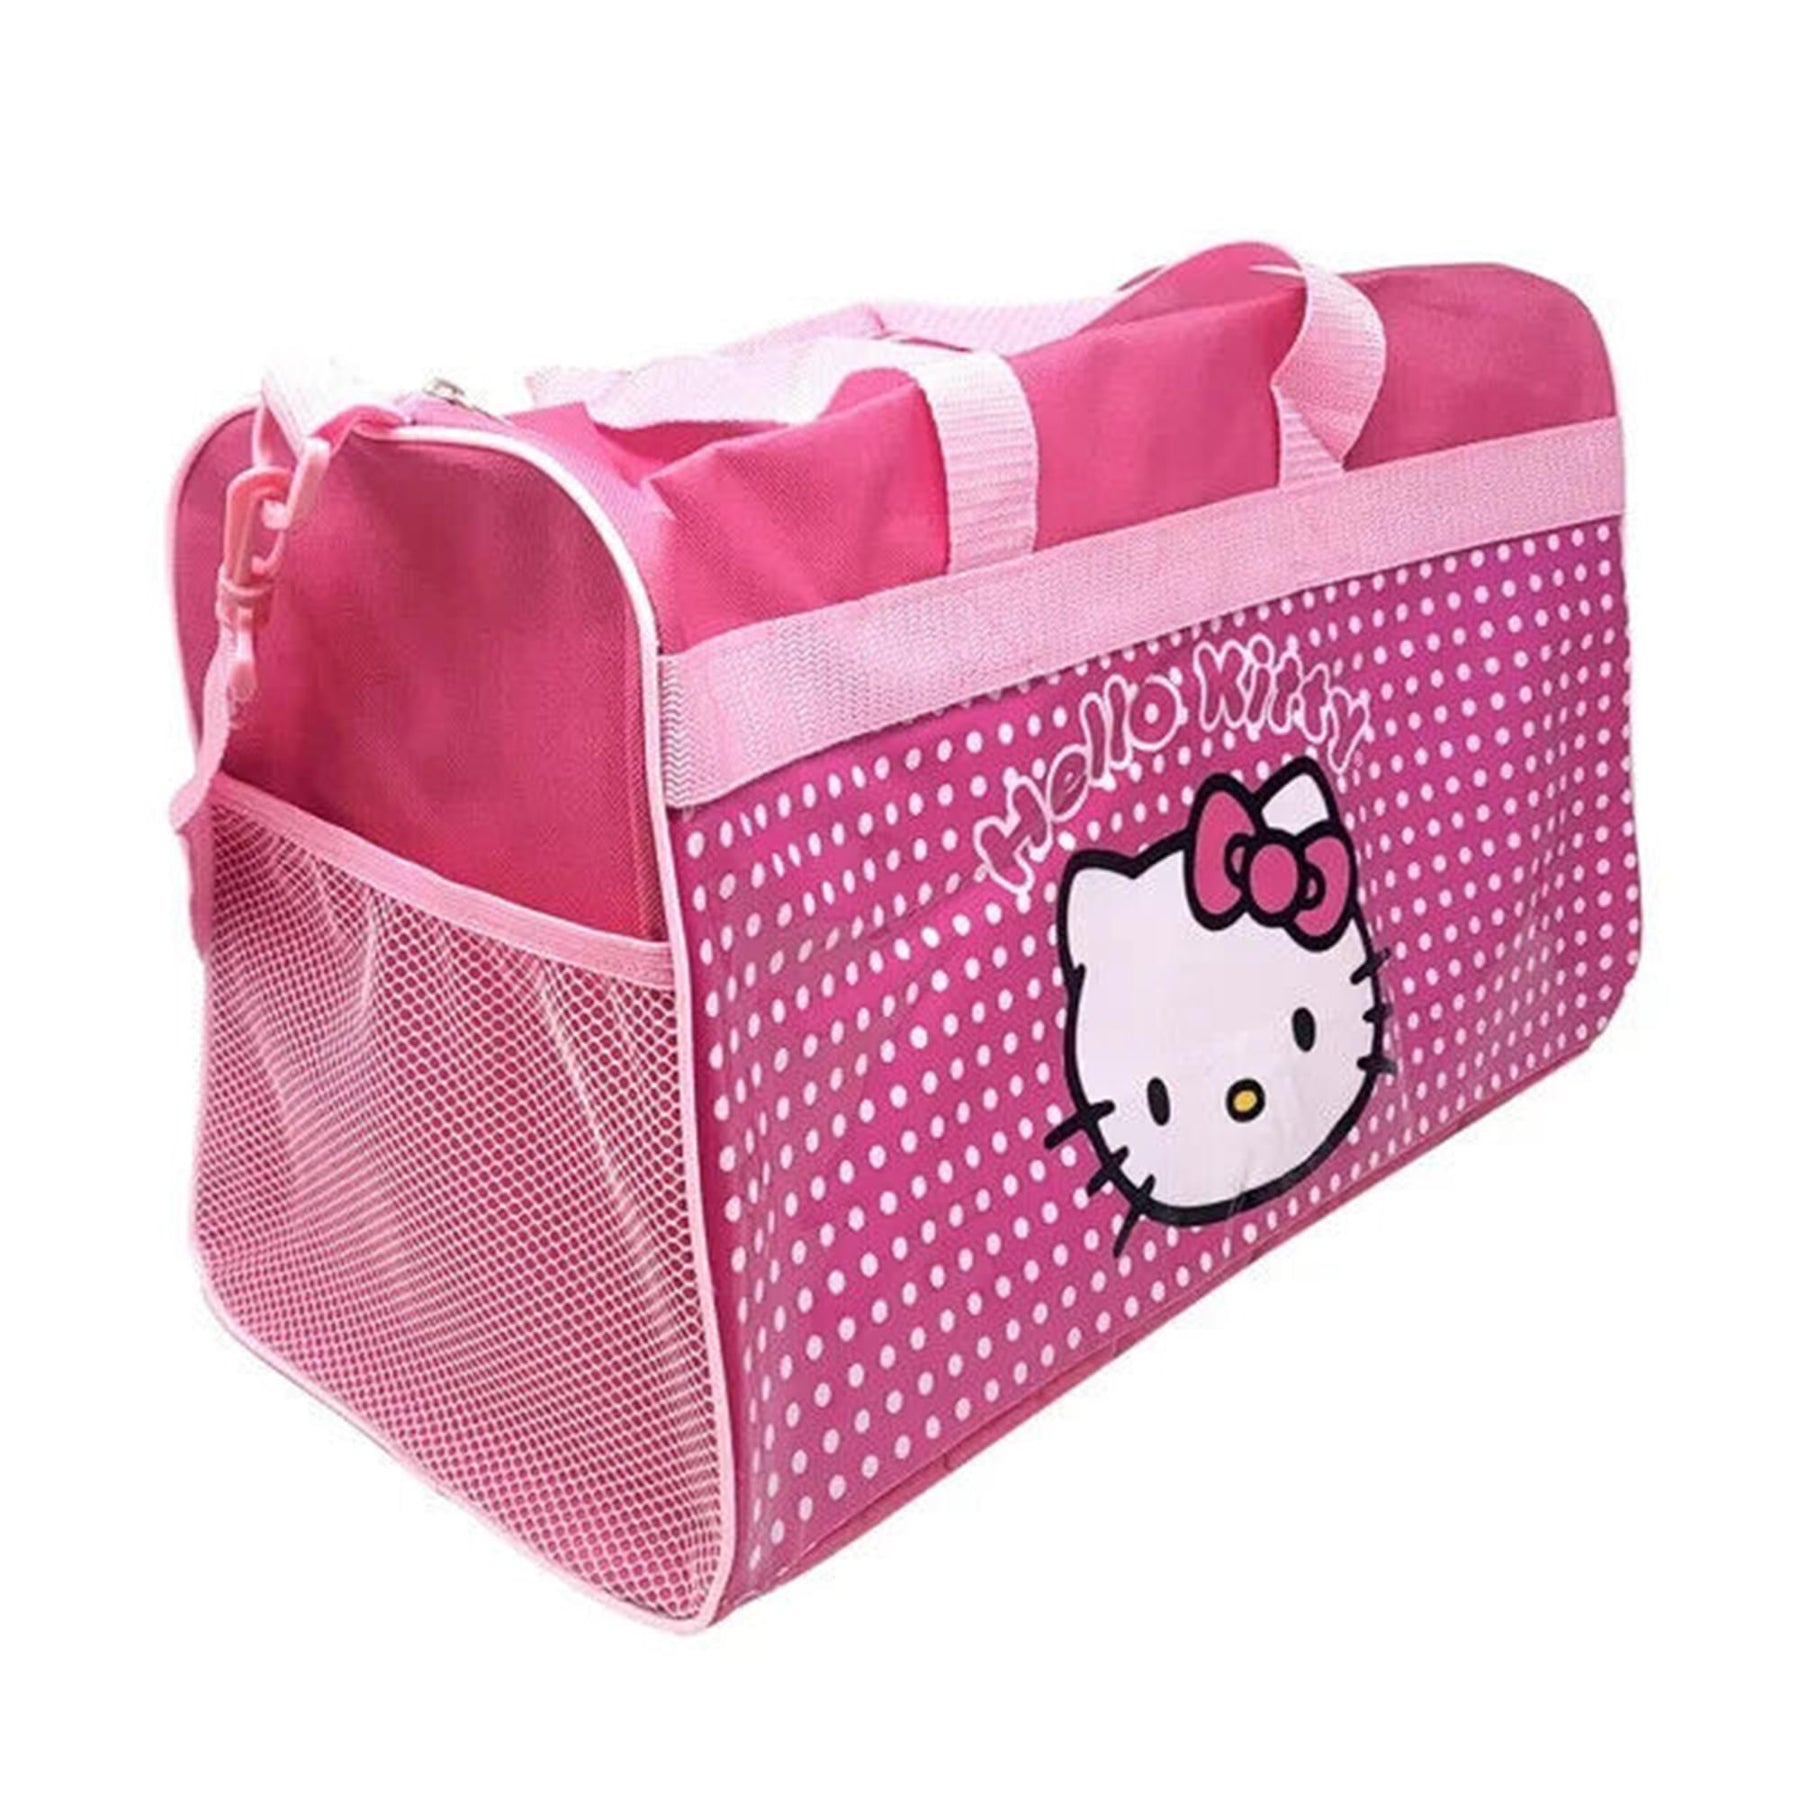 Sanrio Hello Kitty Pink Duffle Bag | 18" x 10" x 11"